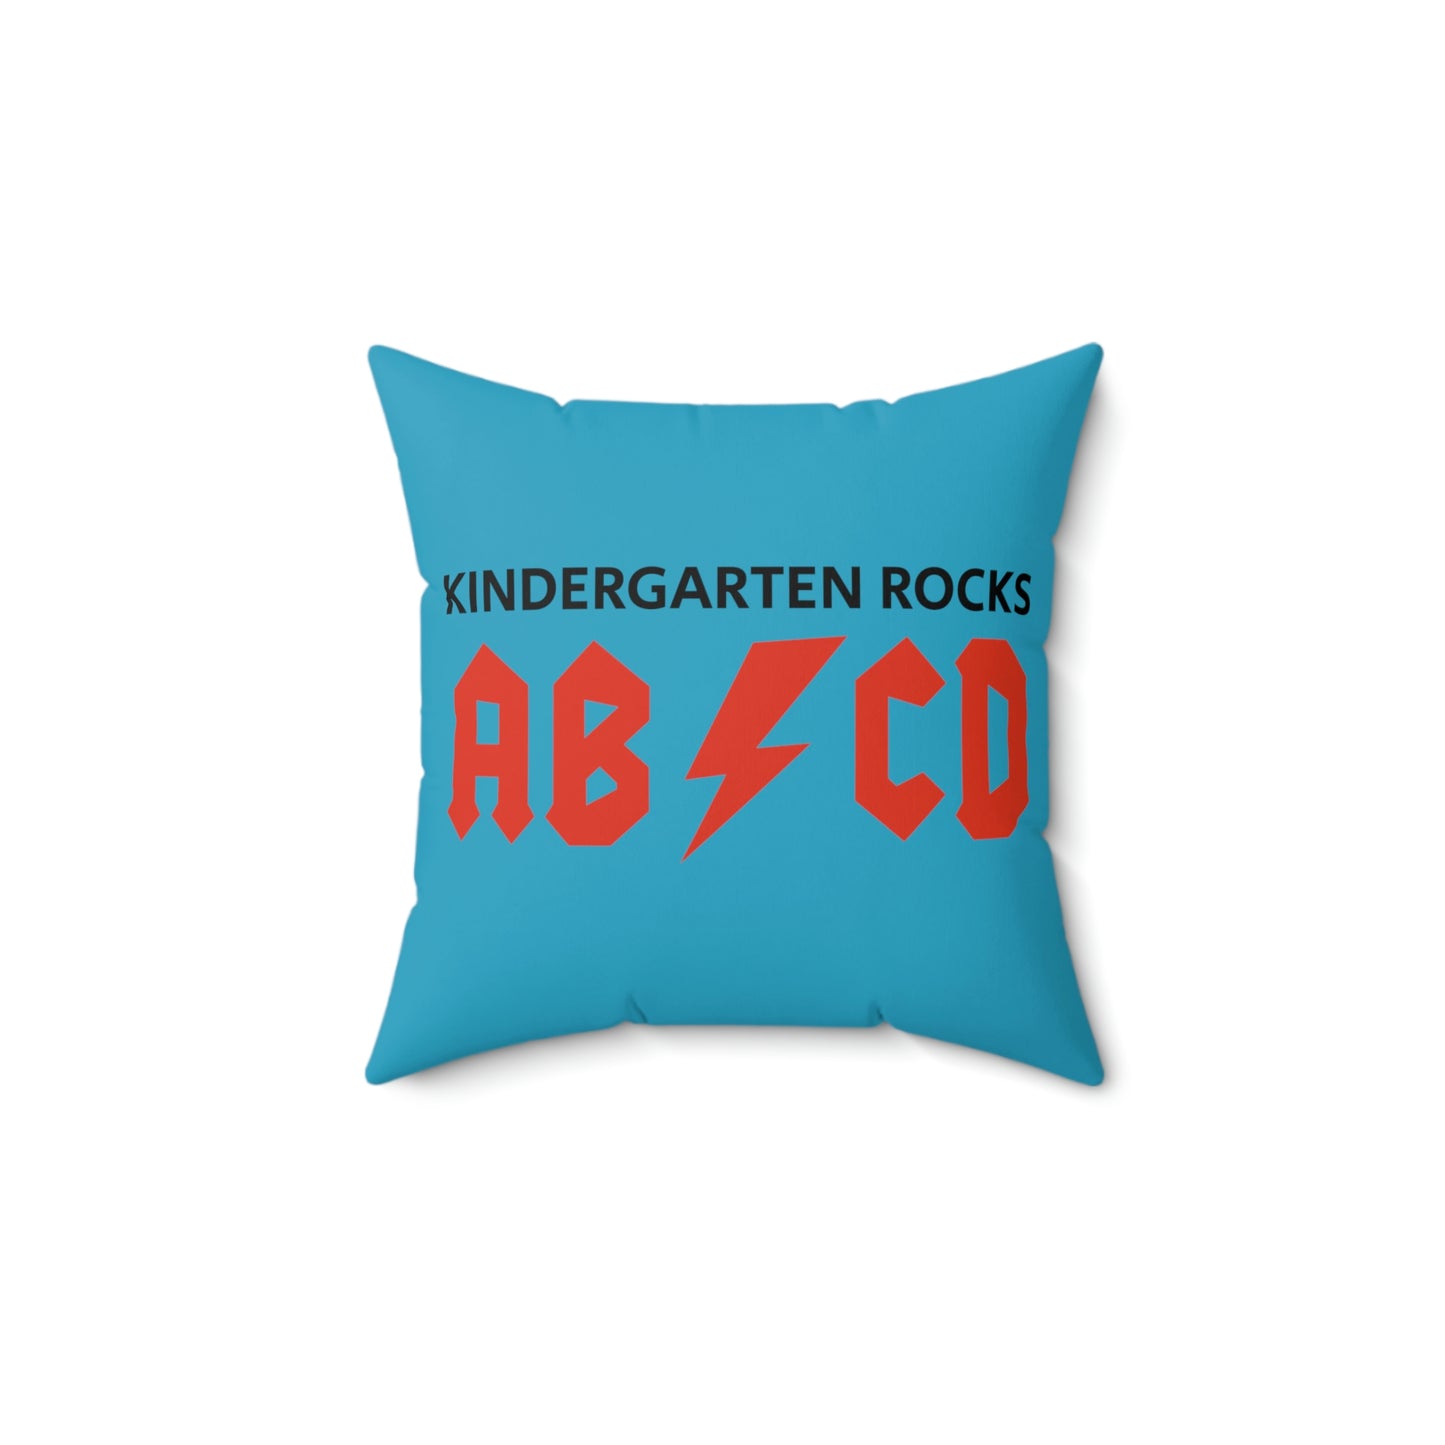 Spun Polyester Square Pillow Case “Kindergarten Rocks on Turquoise”